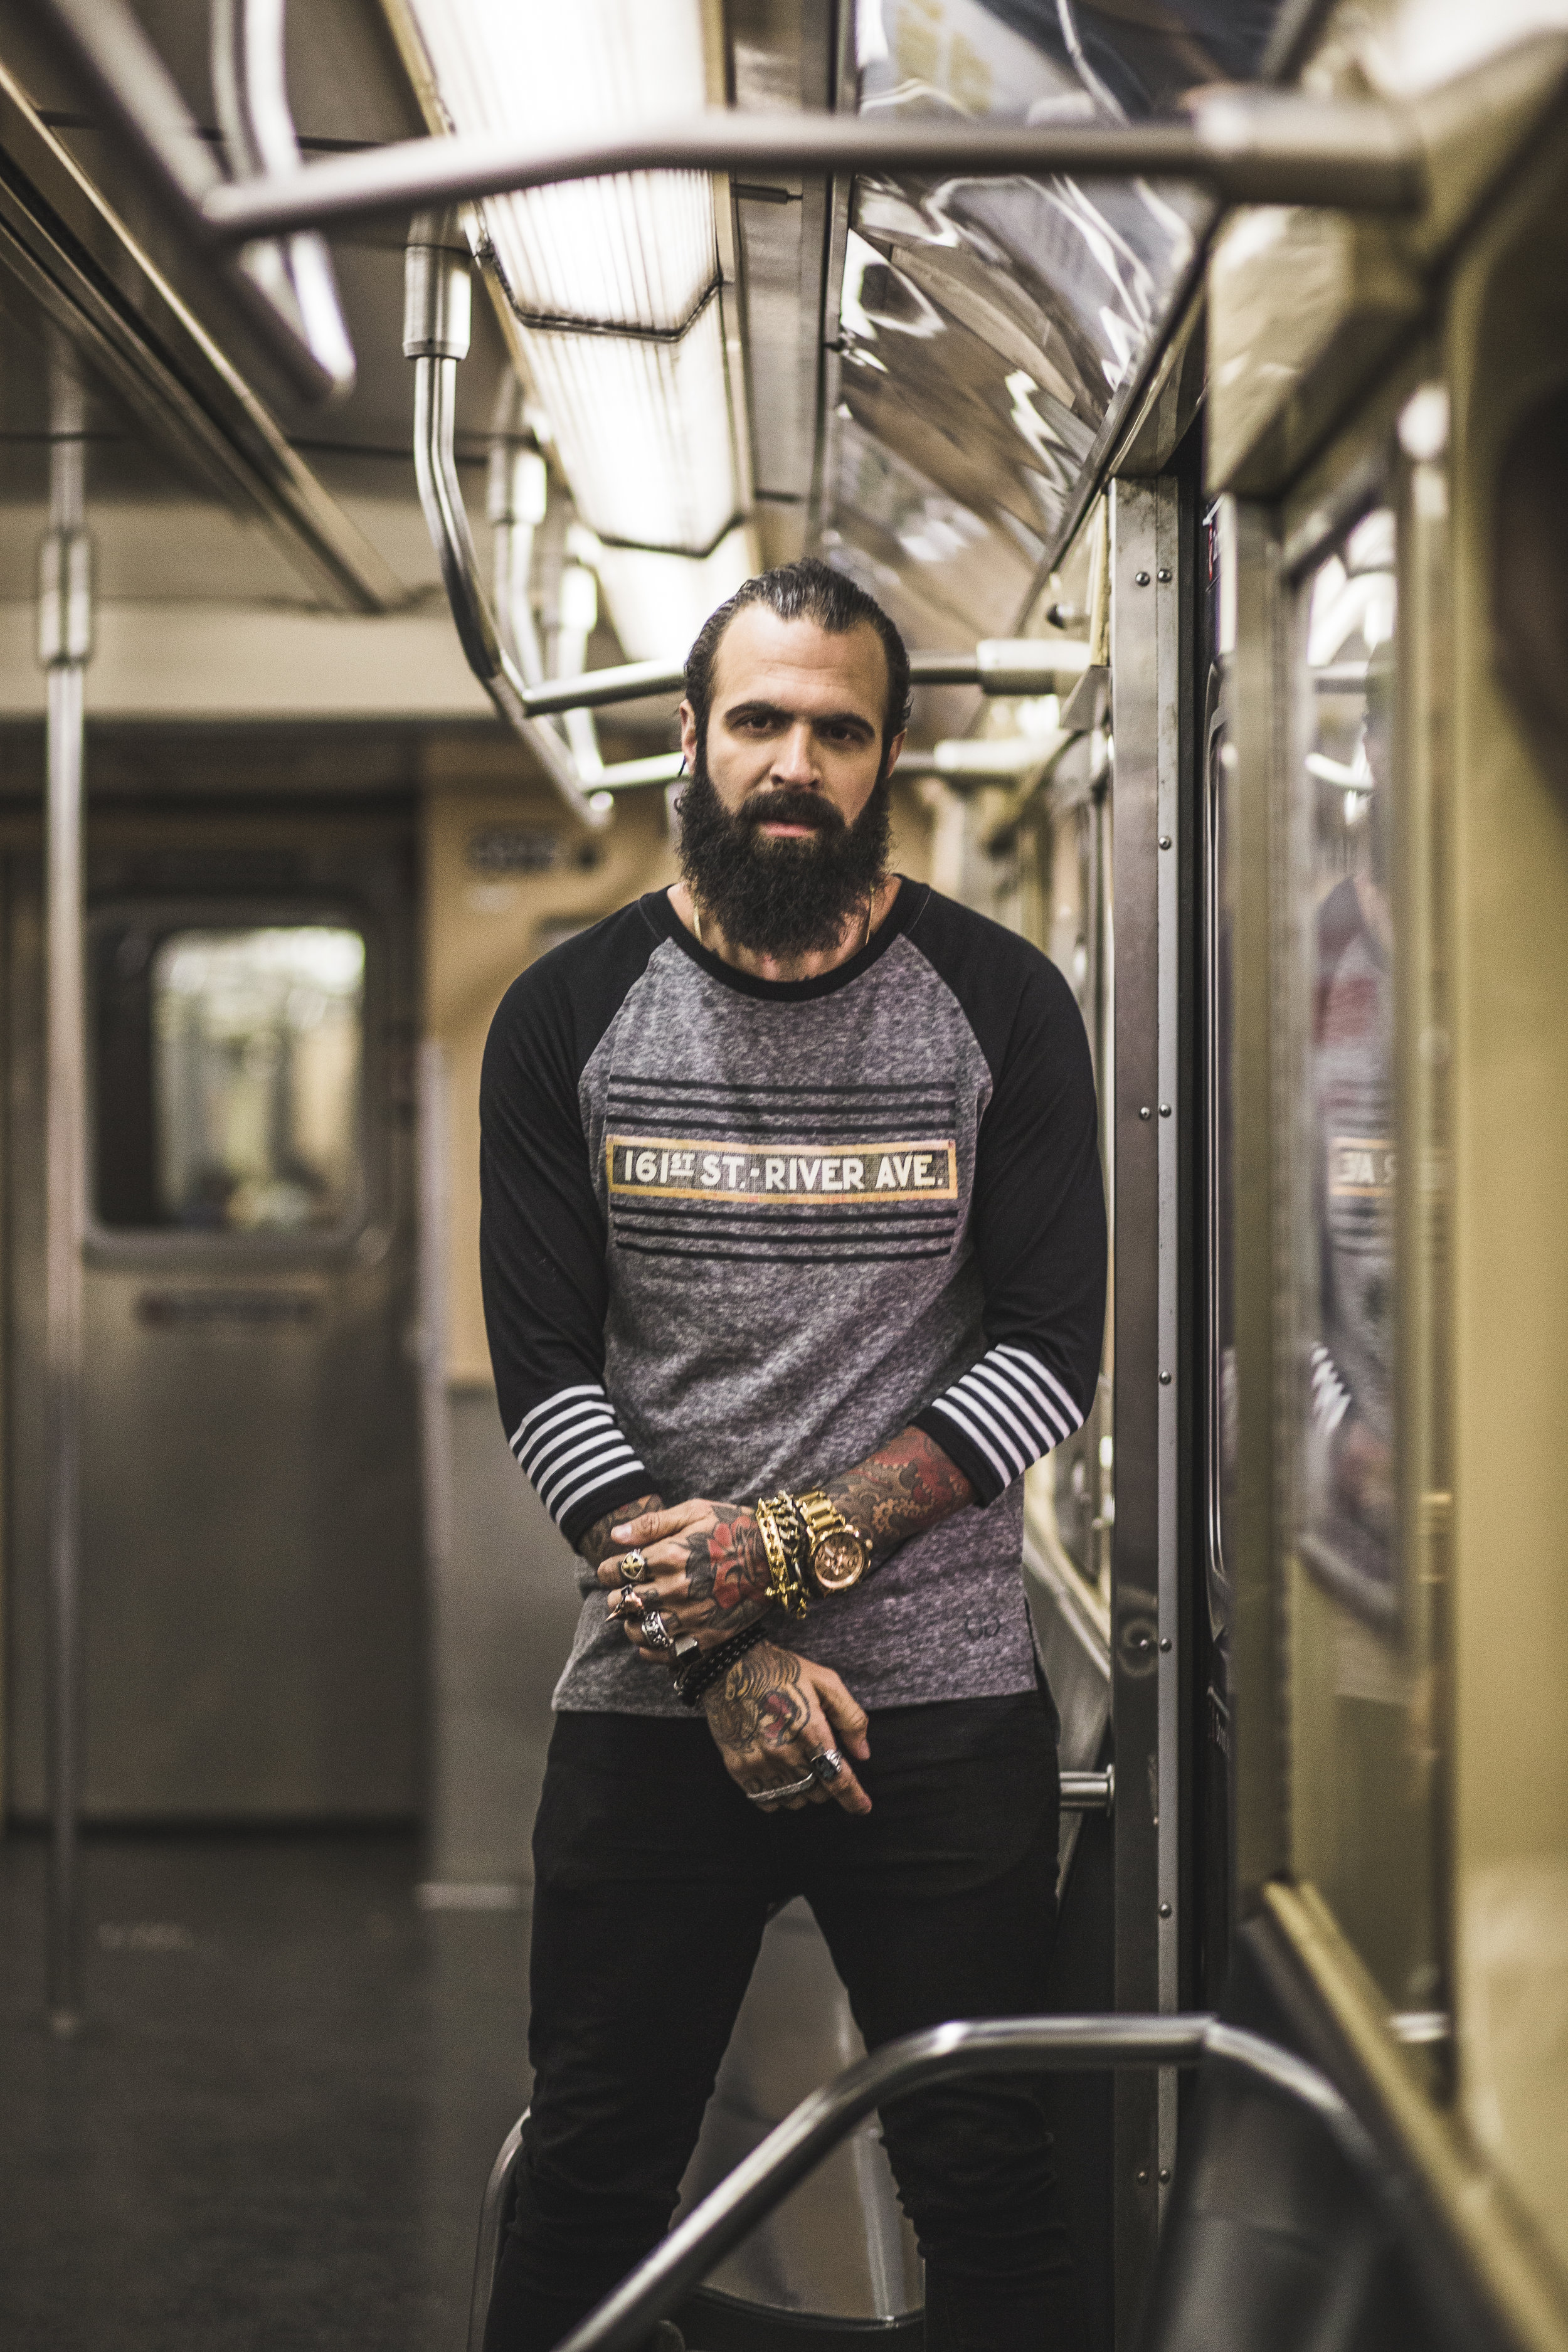 Grungy Gentleman x Subway Tile Shirts 2.jpg